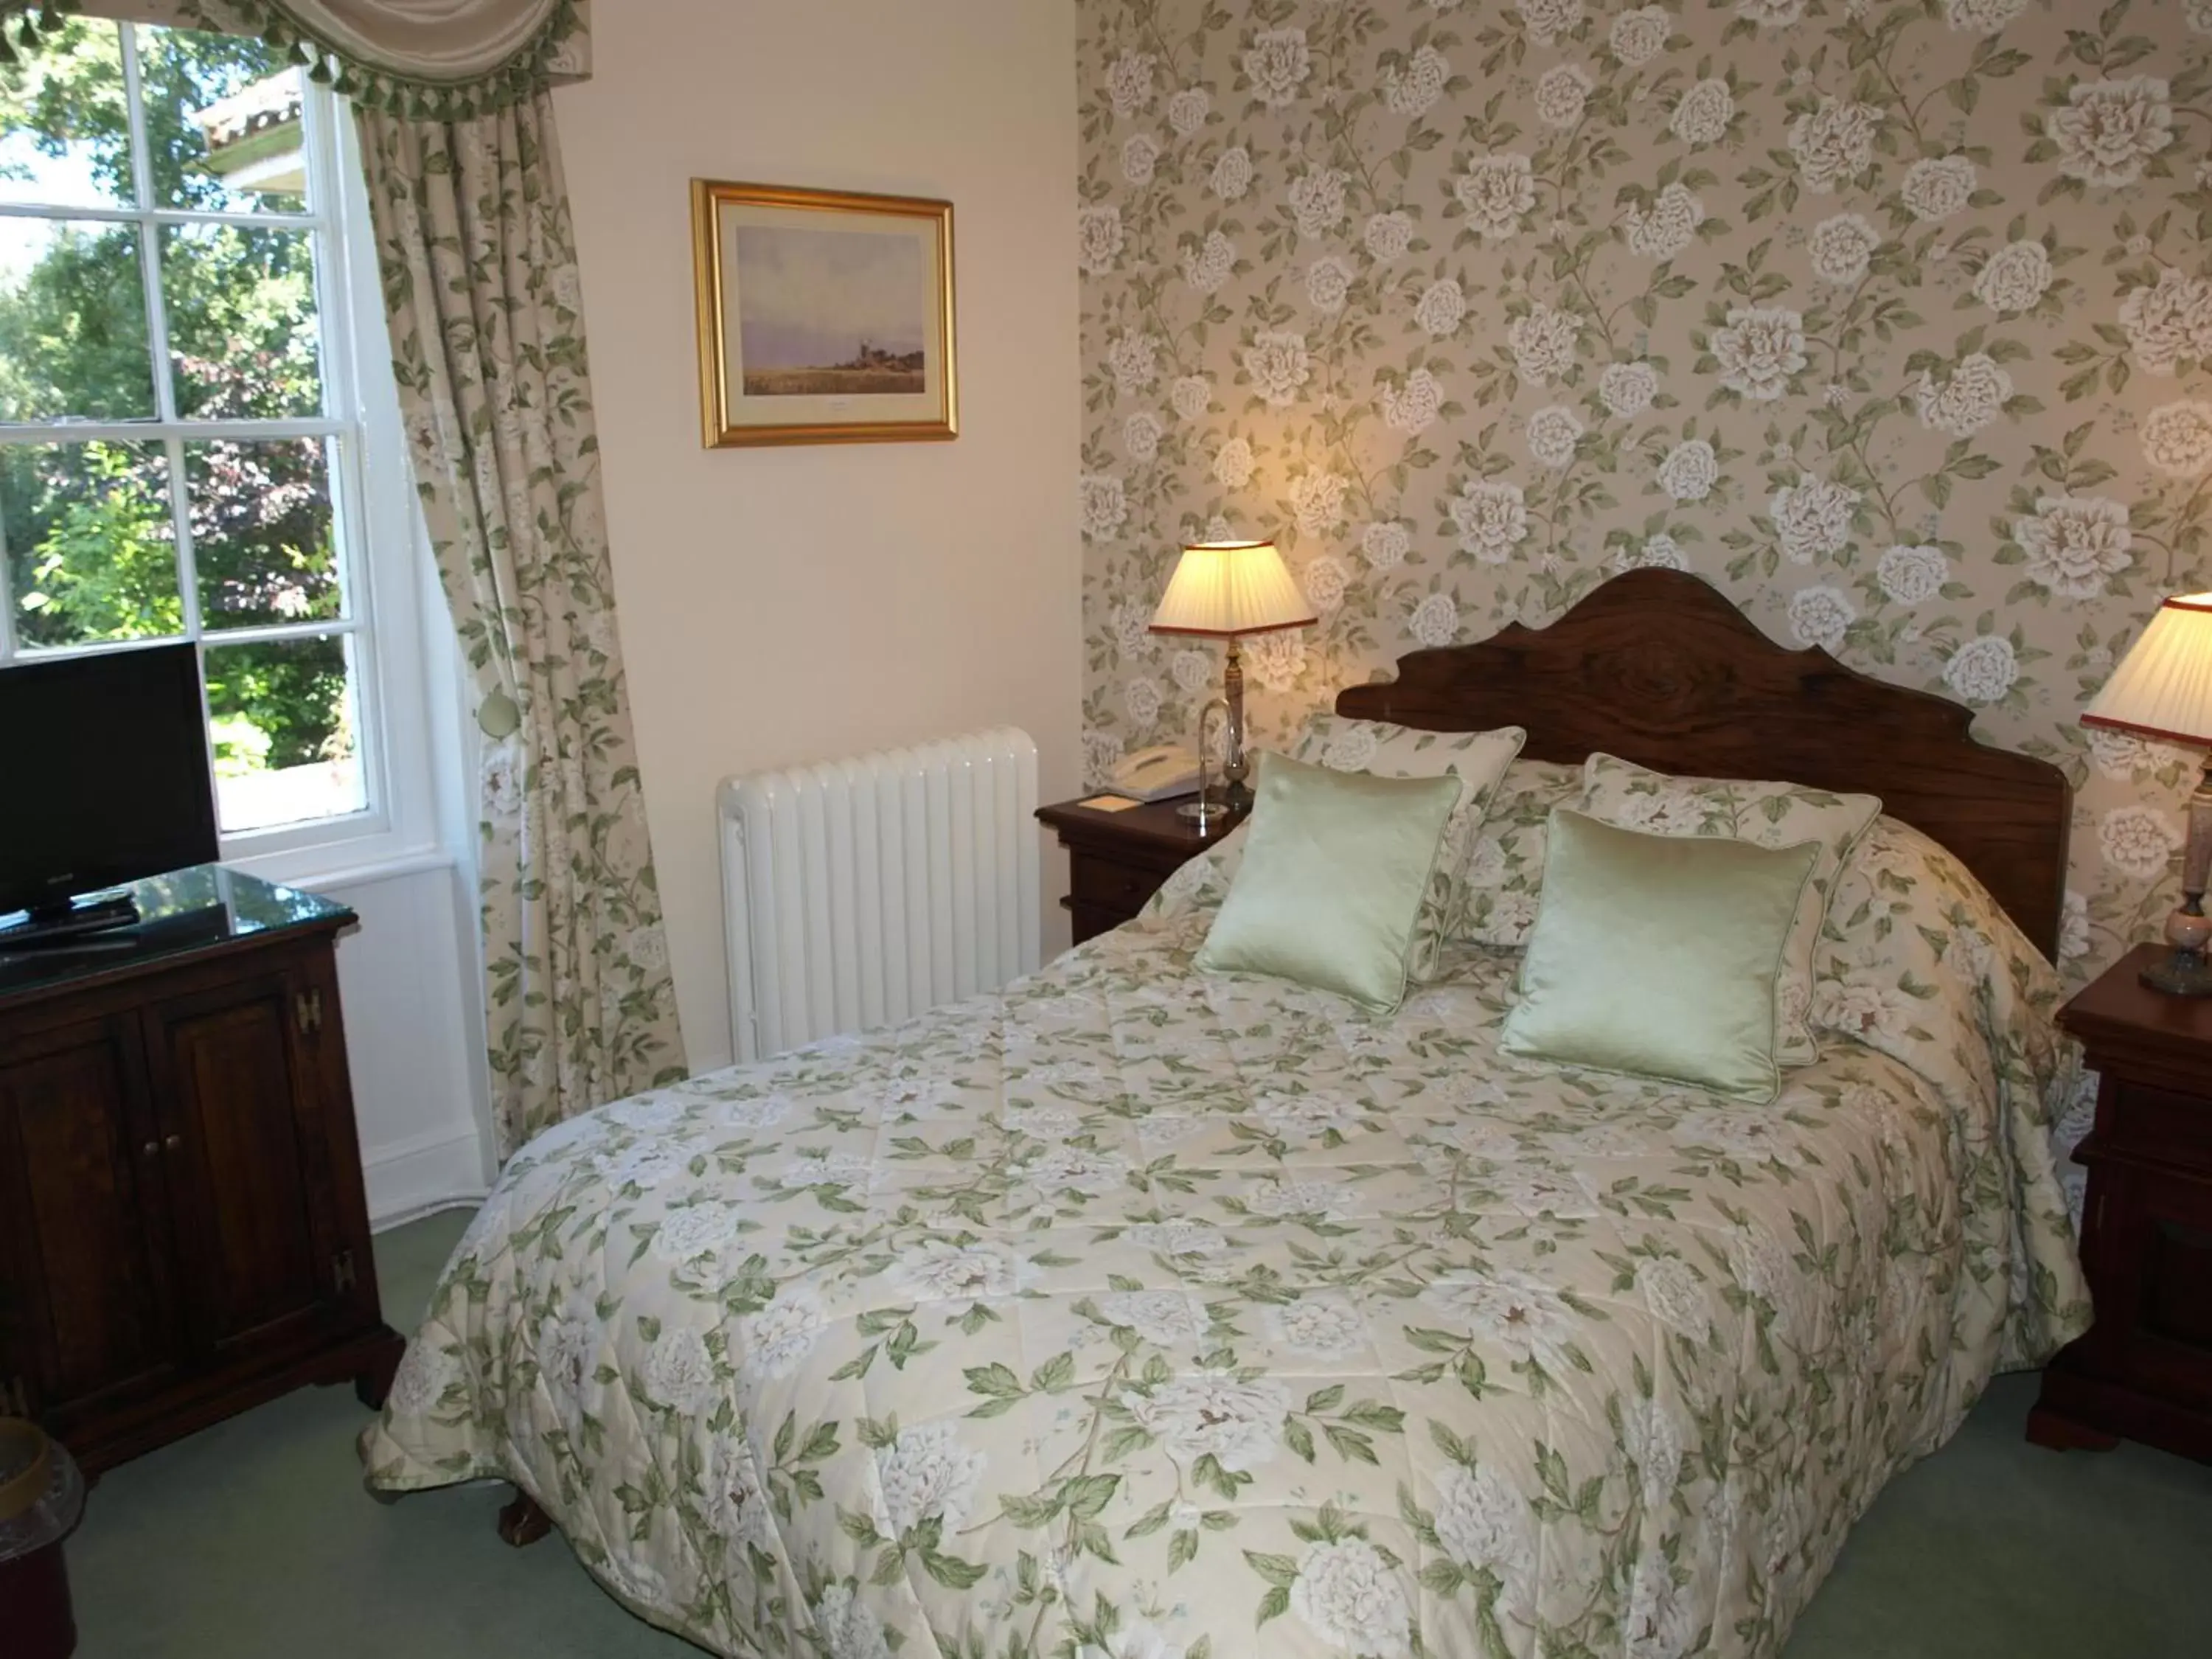 Bed, Room Photo in Beechwood Hotel